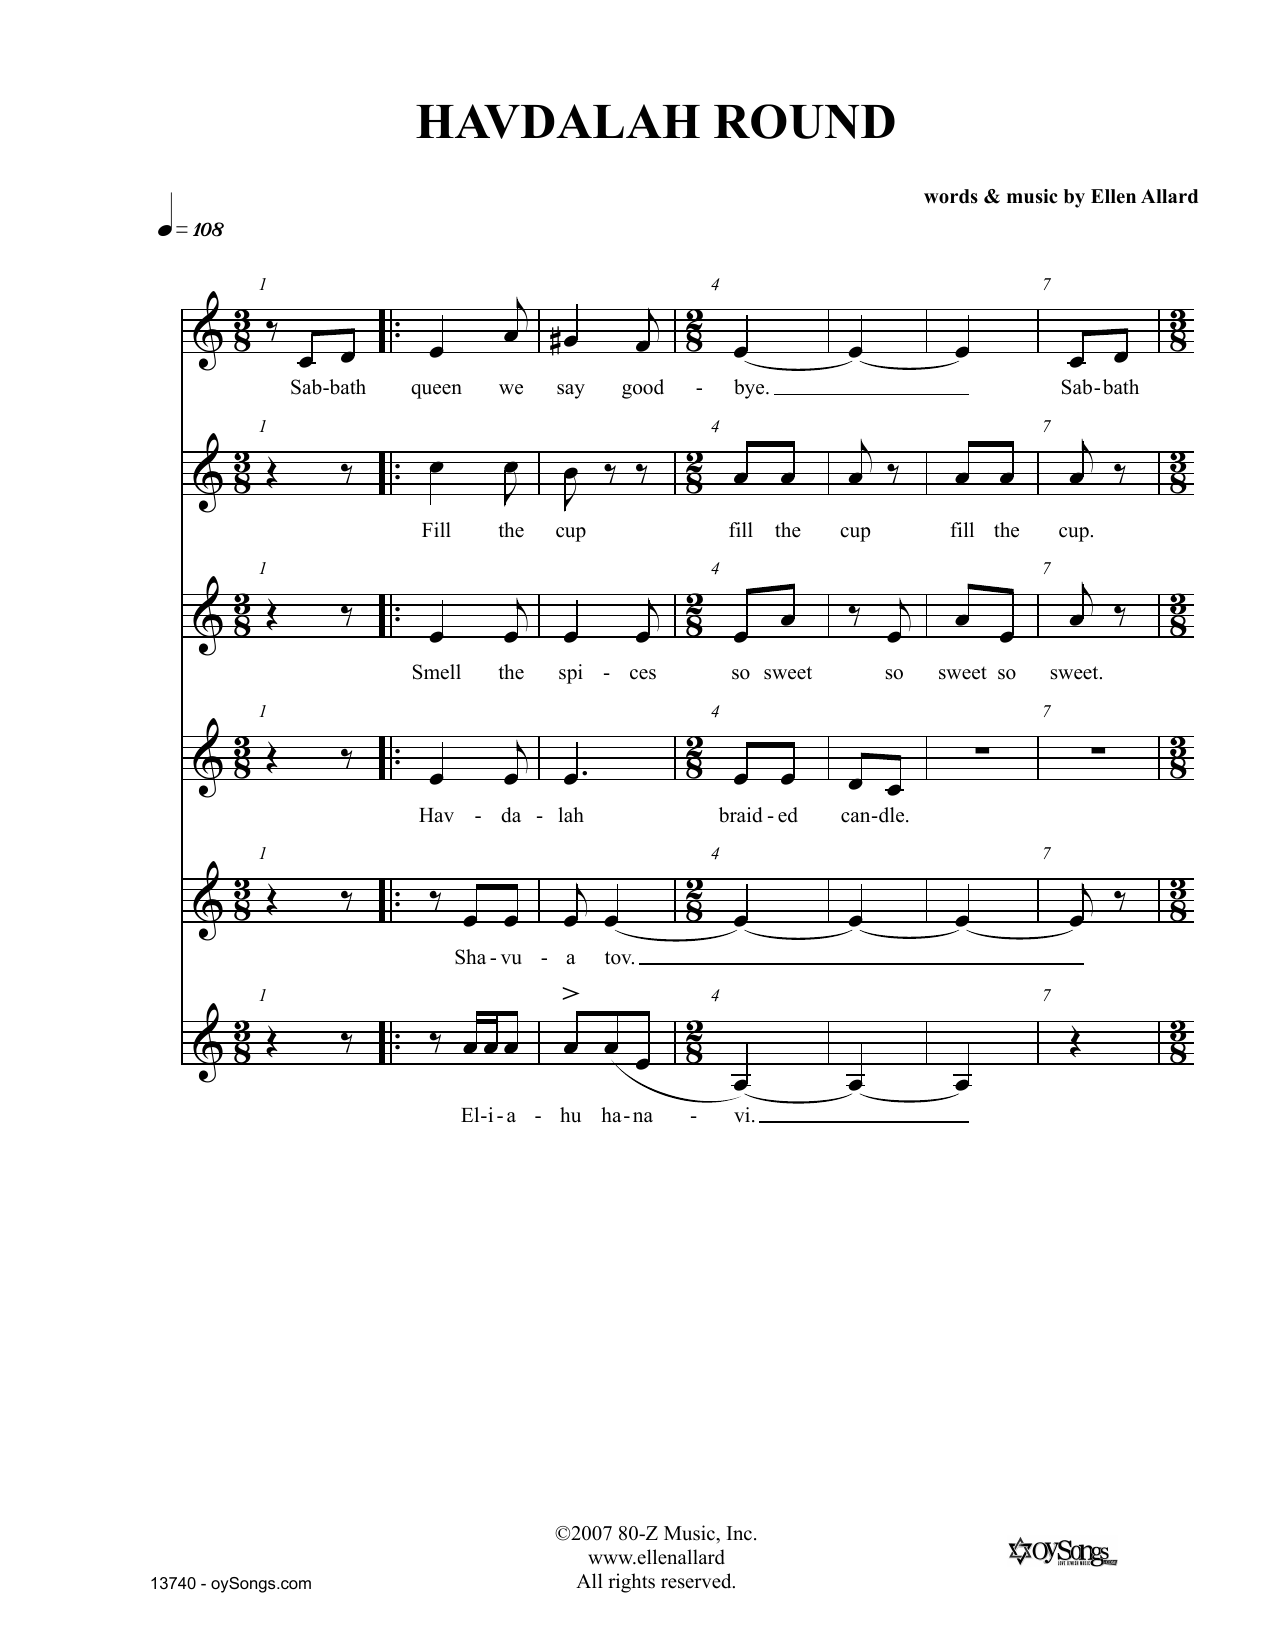 Ellen Allard Havdalah Round Sheet Music Notes & Chords for Melody Line, Lyrics & Chords - Download or Print PDF